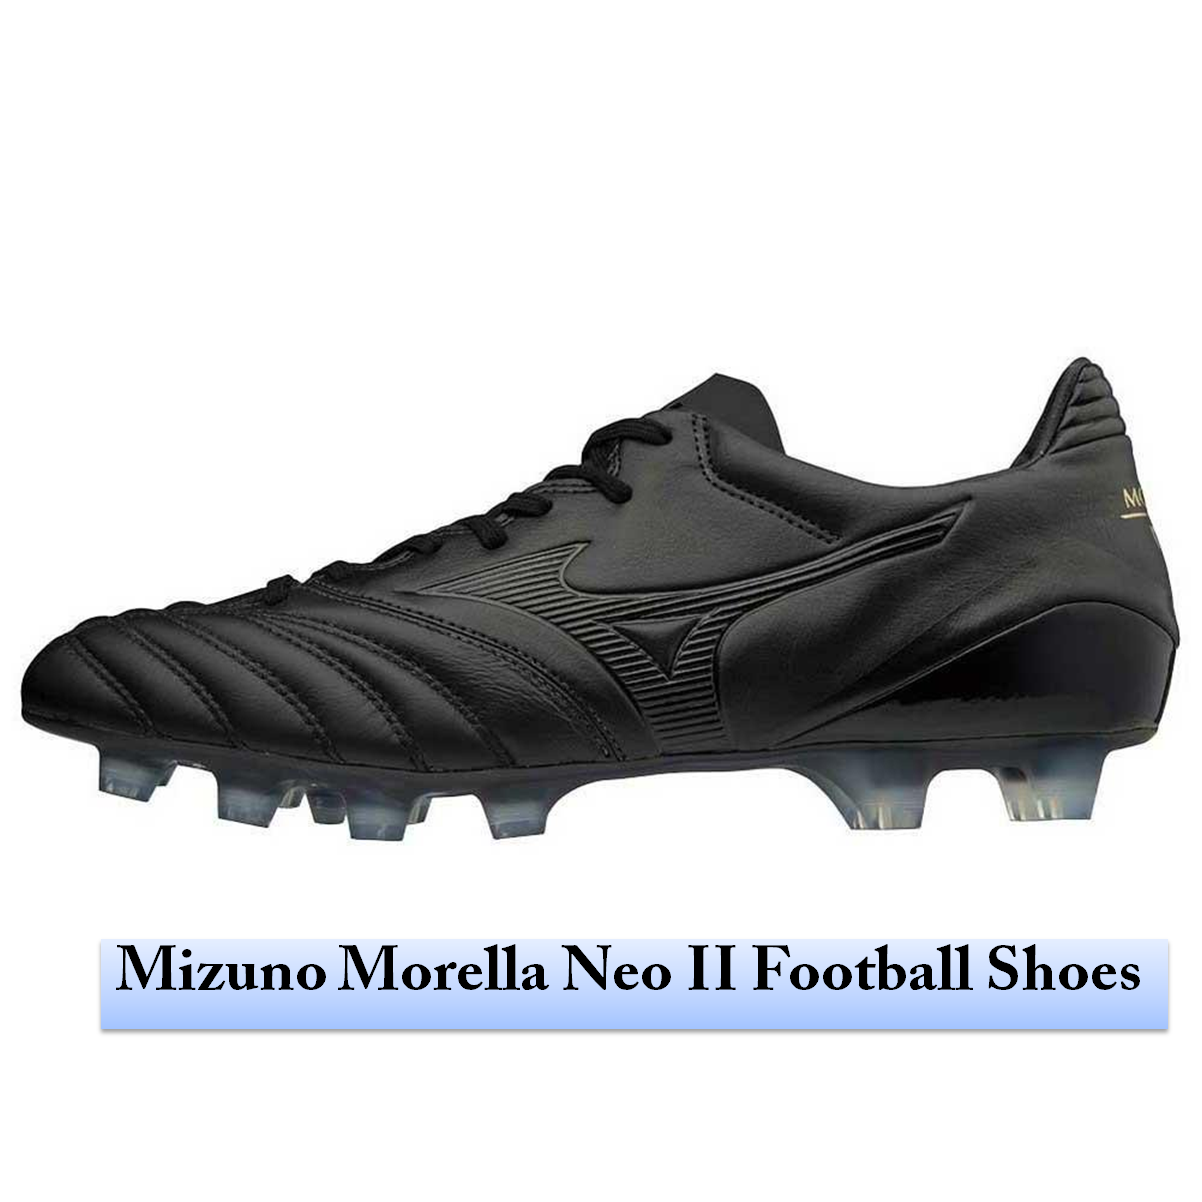 Mizuno_Morella_Neo_II_Football_Shoes